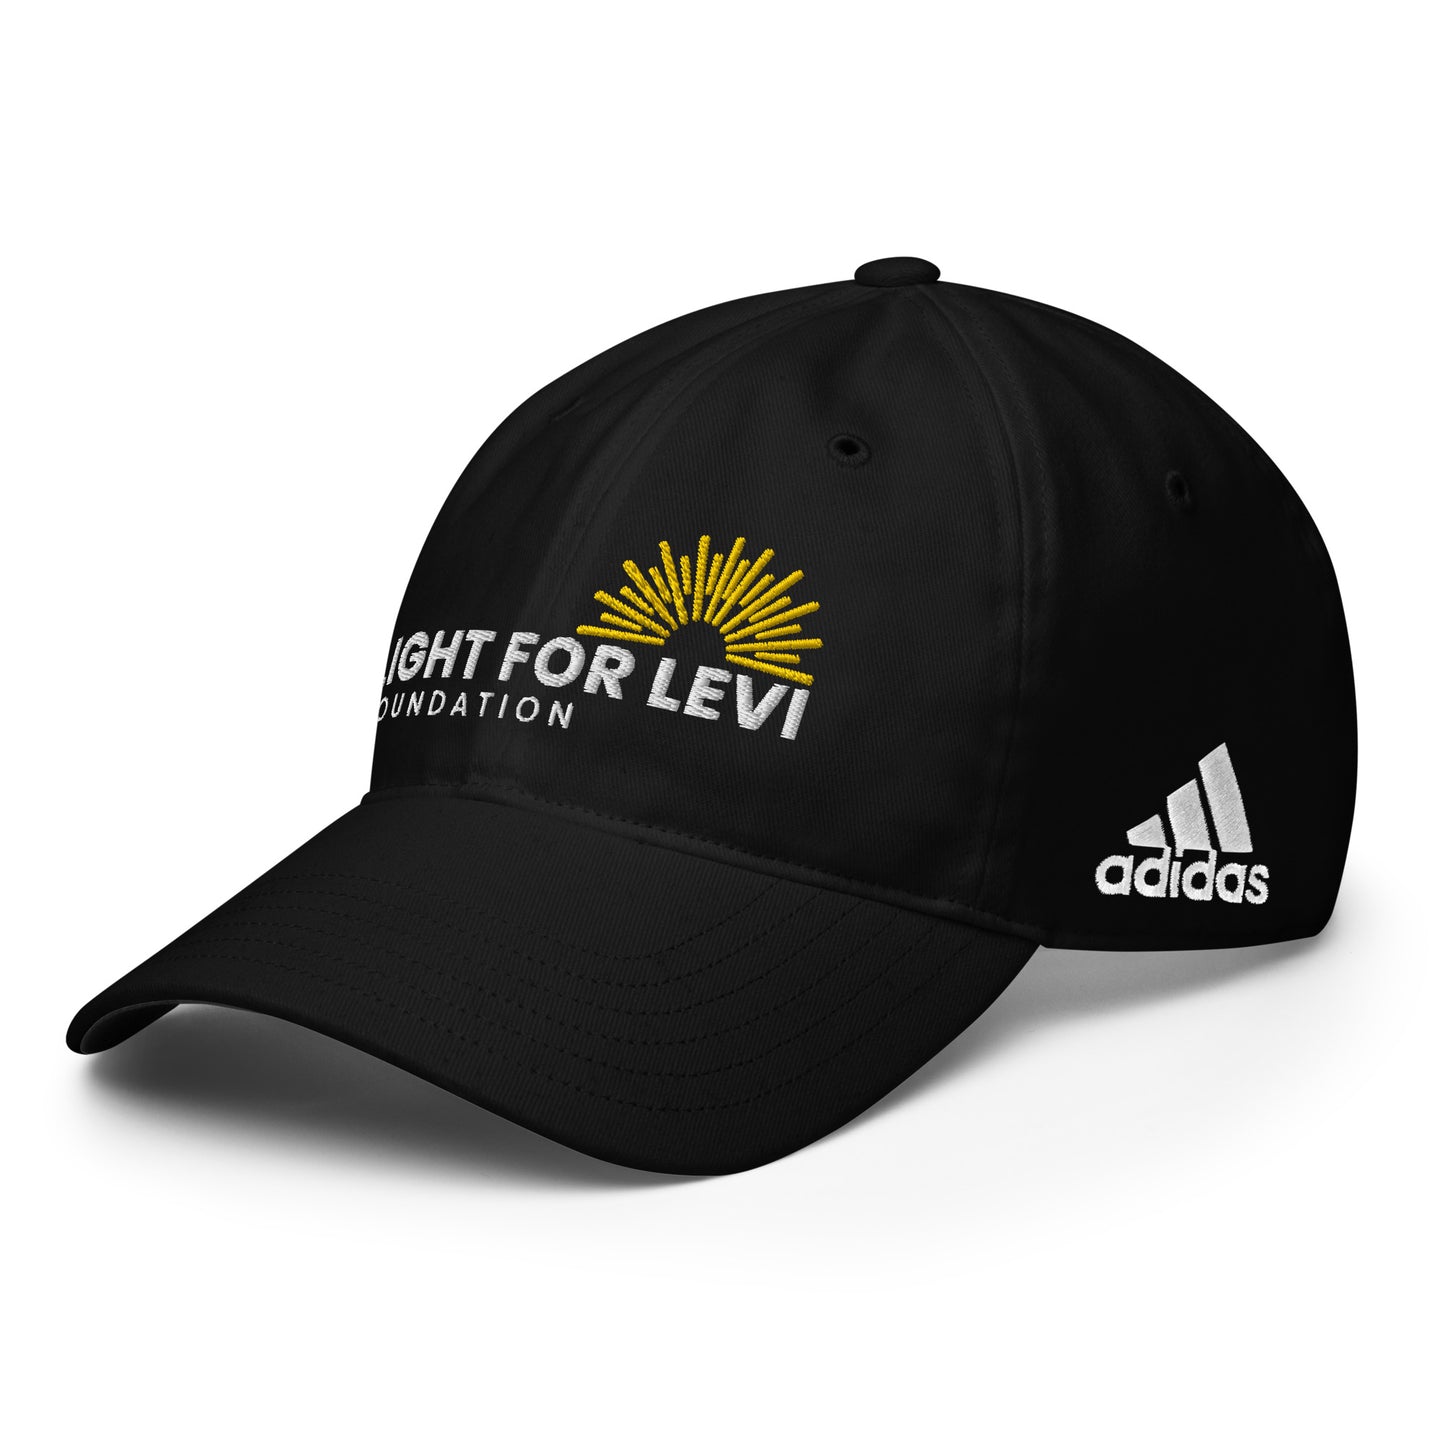 Light For Levi Foundation — Performance Golf Hat